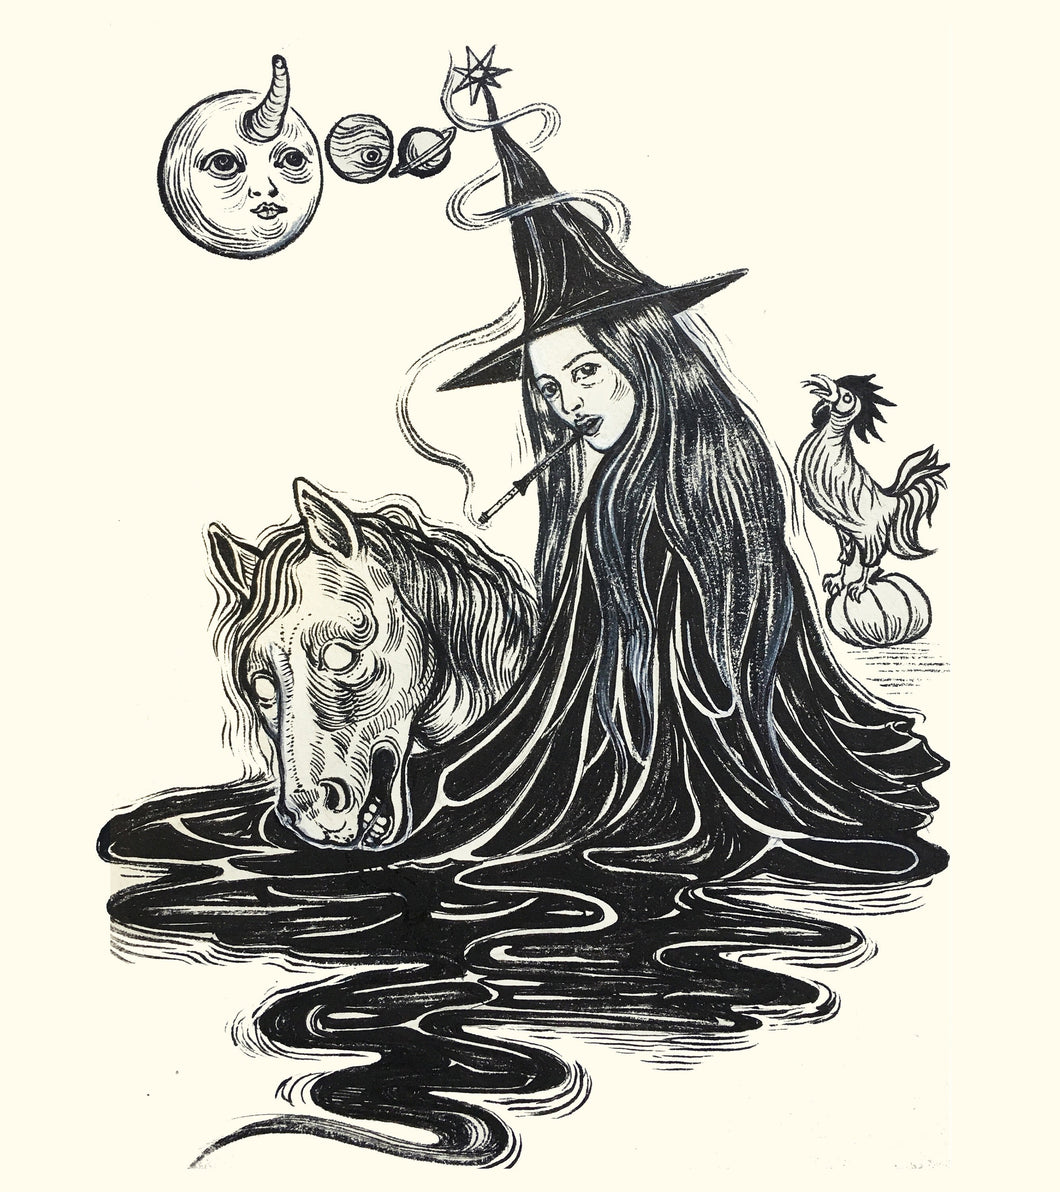 Upir Drawing, Obur, Ubir Witch with her dead horse, Vampire Witch, Vampire ink illustration, Original Ink on Paper, 21x30 cm, Halloween Art